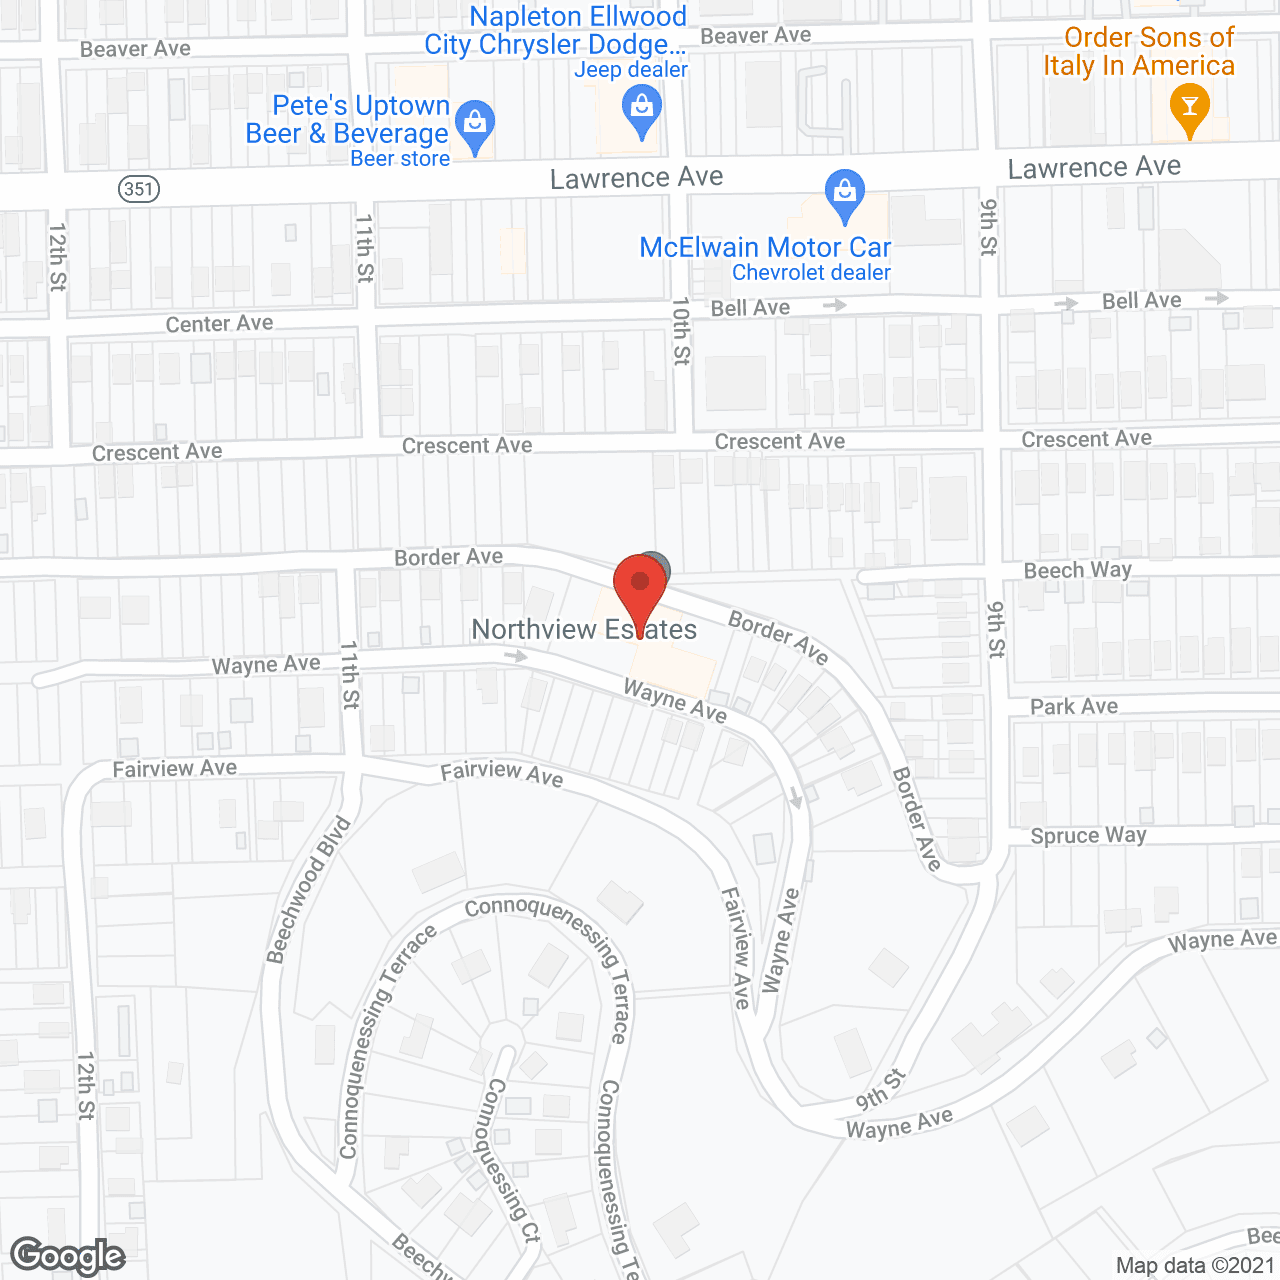 Northview Estates in google map